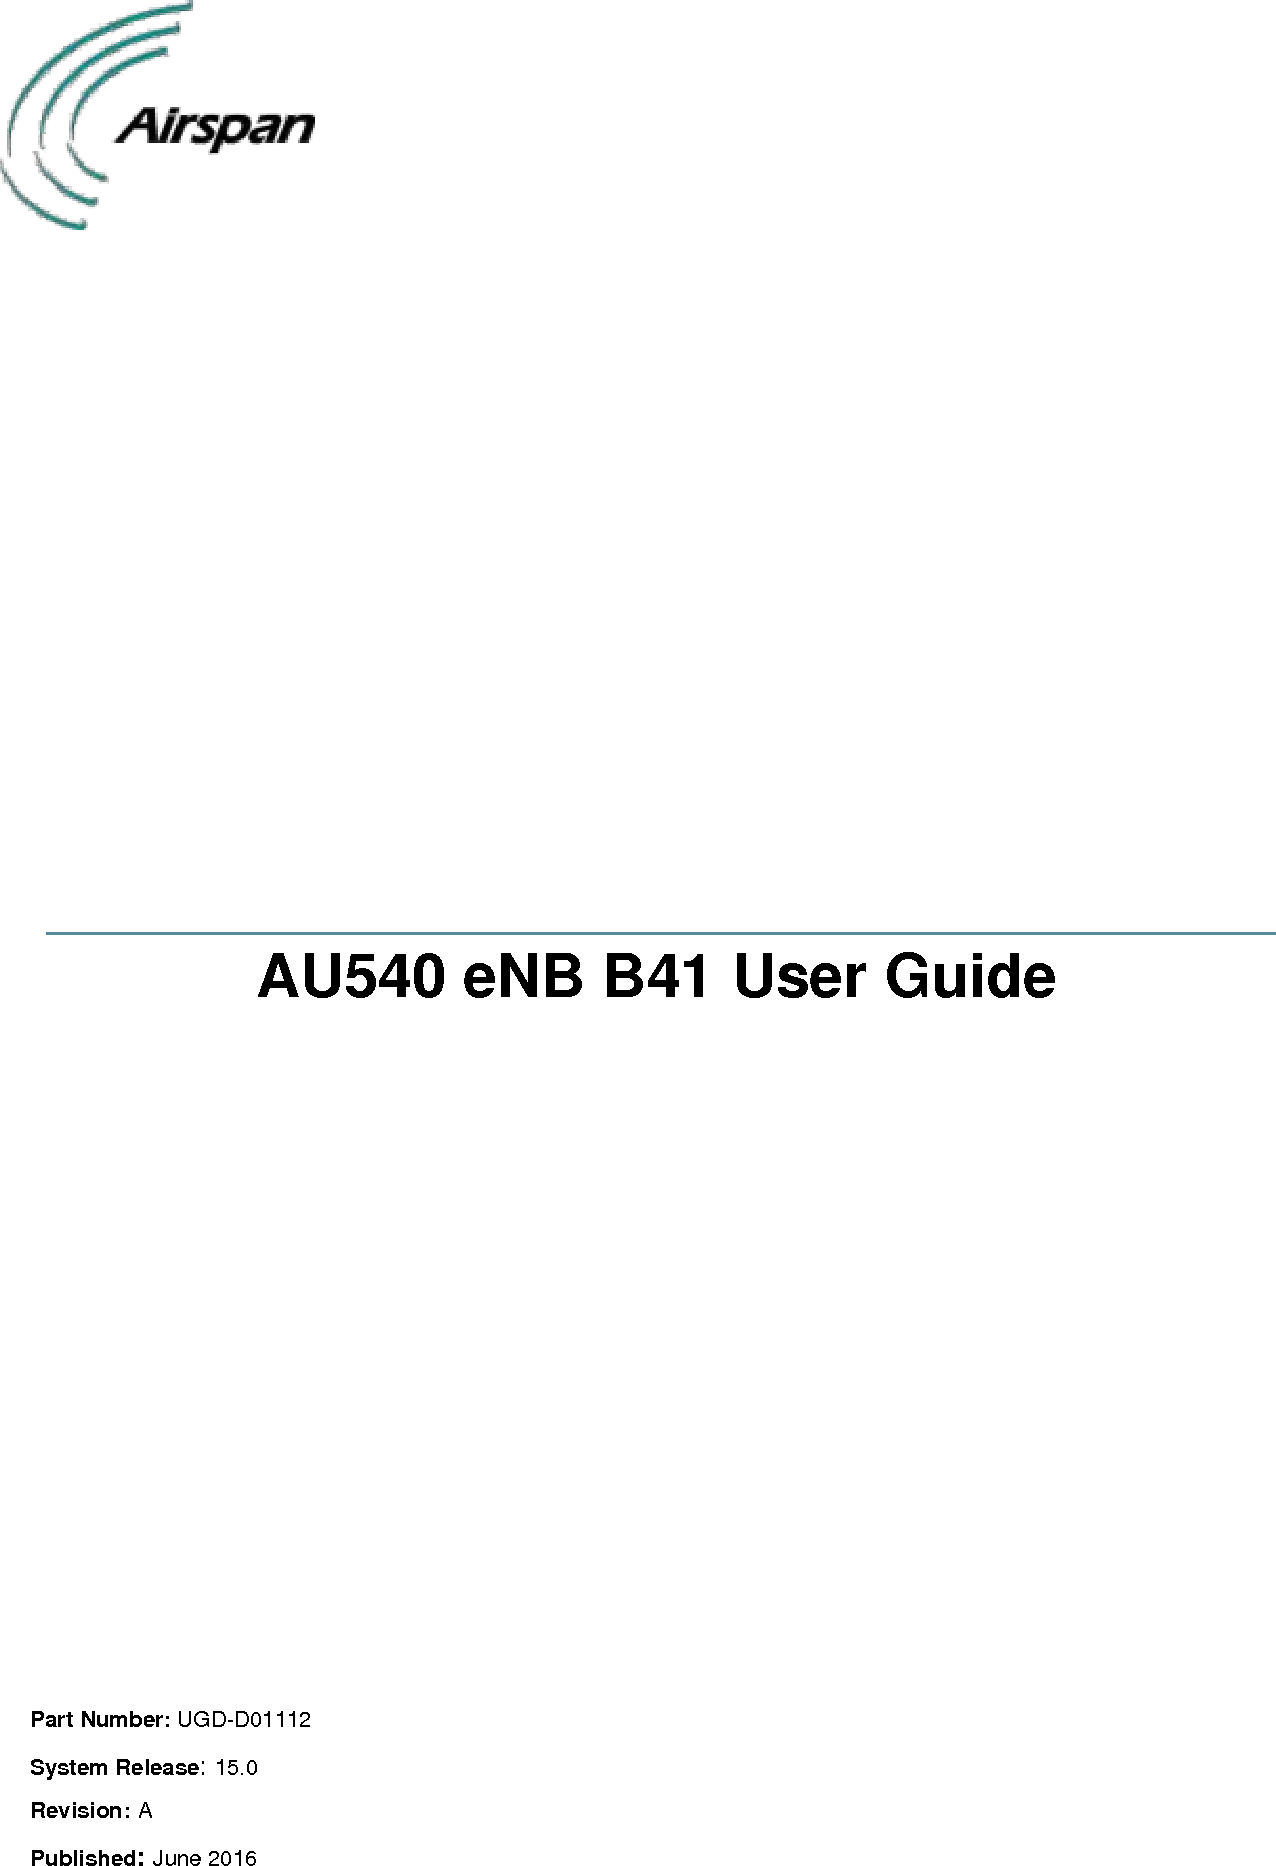                       AU540 eNB B41 User Guide                Part Number: UGD-D01112 System Release: 15.0 Revision: A Published: June 2016  